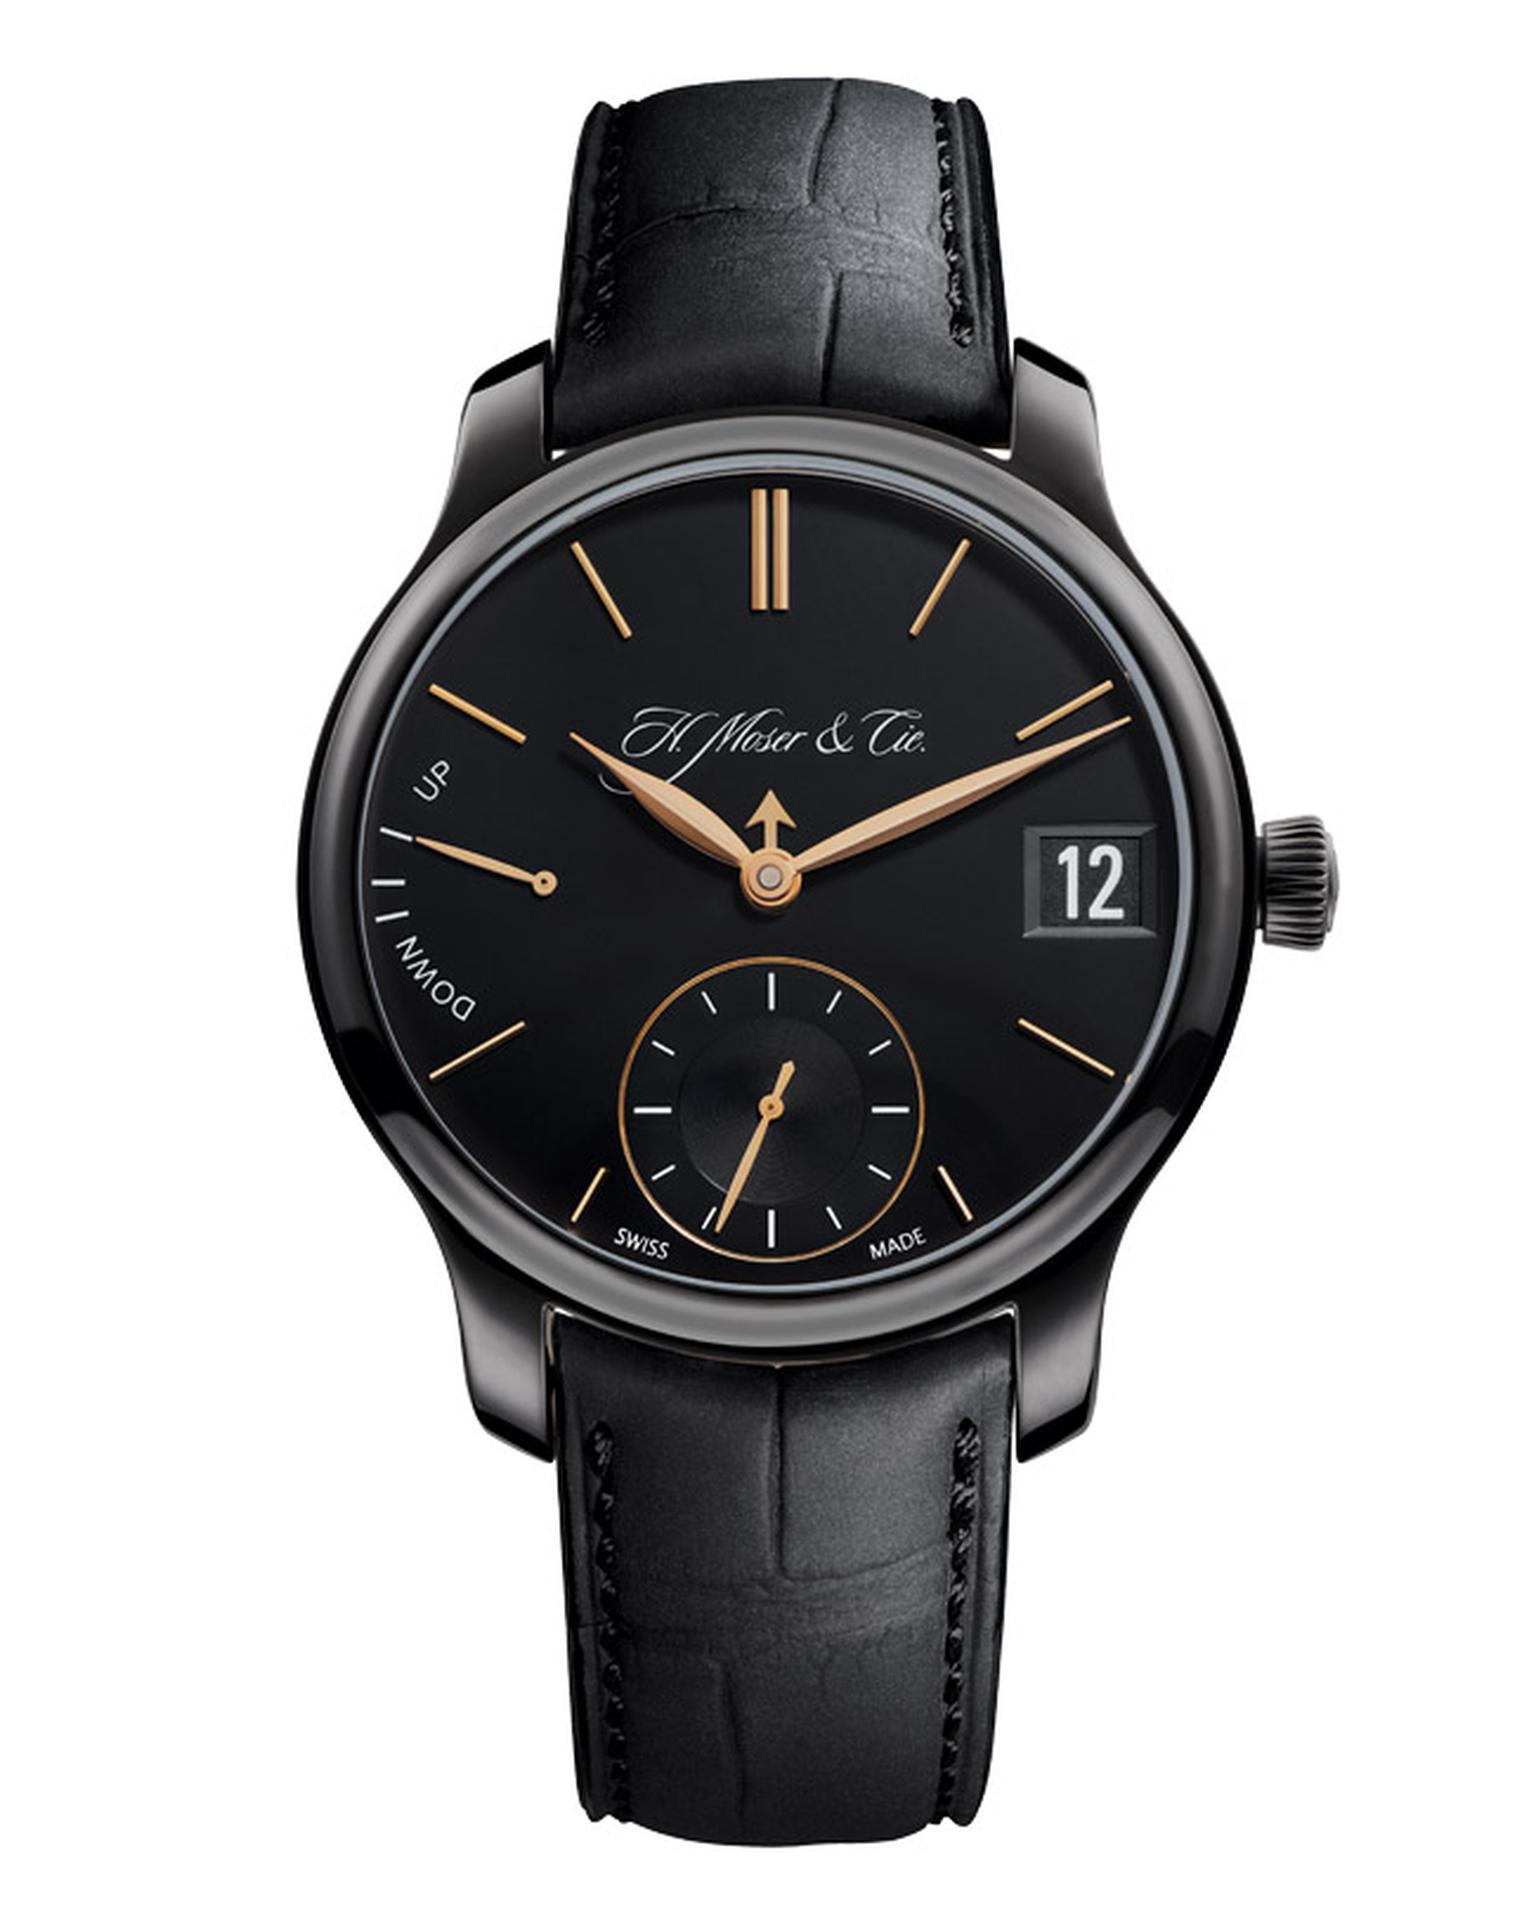 H.-Moser-&-Cie-P-Calendar-Black-Watch-Main